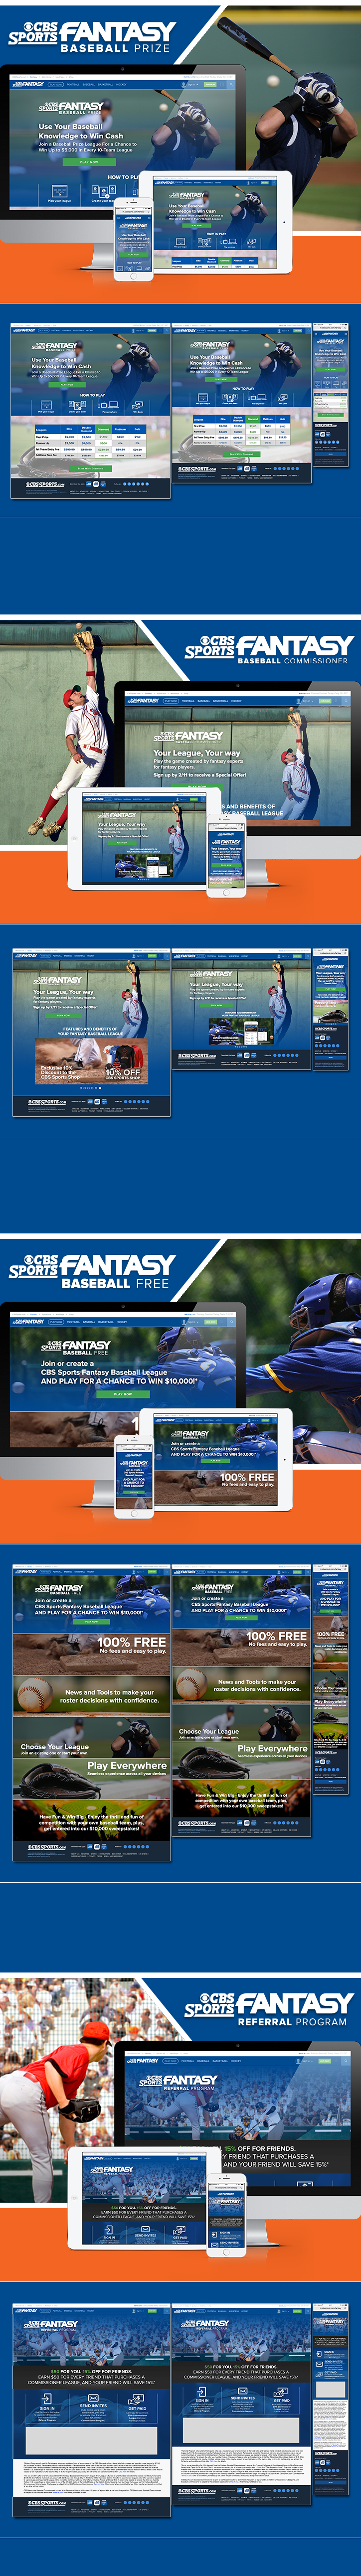 cbs fantasy baseball sports UI ux design Web landing page mobile desktop Layout iphone iPad iMac